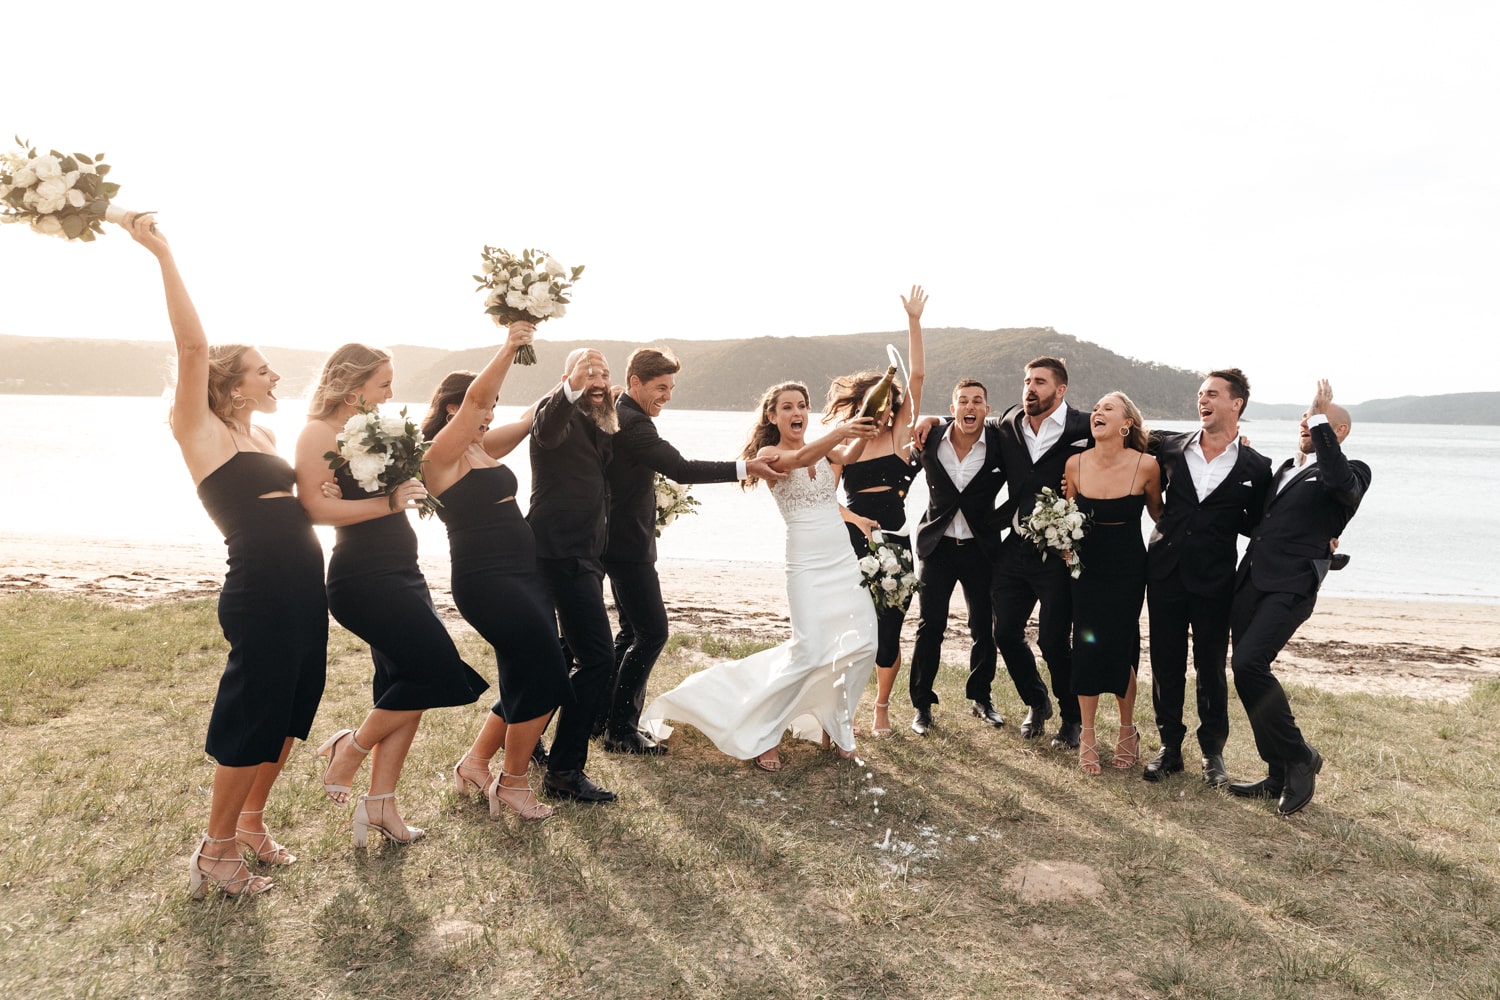 jacqui popping a bottle of bubbles - australian winter wedding -palm beach wedding